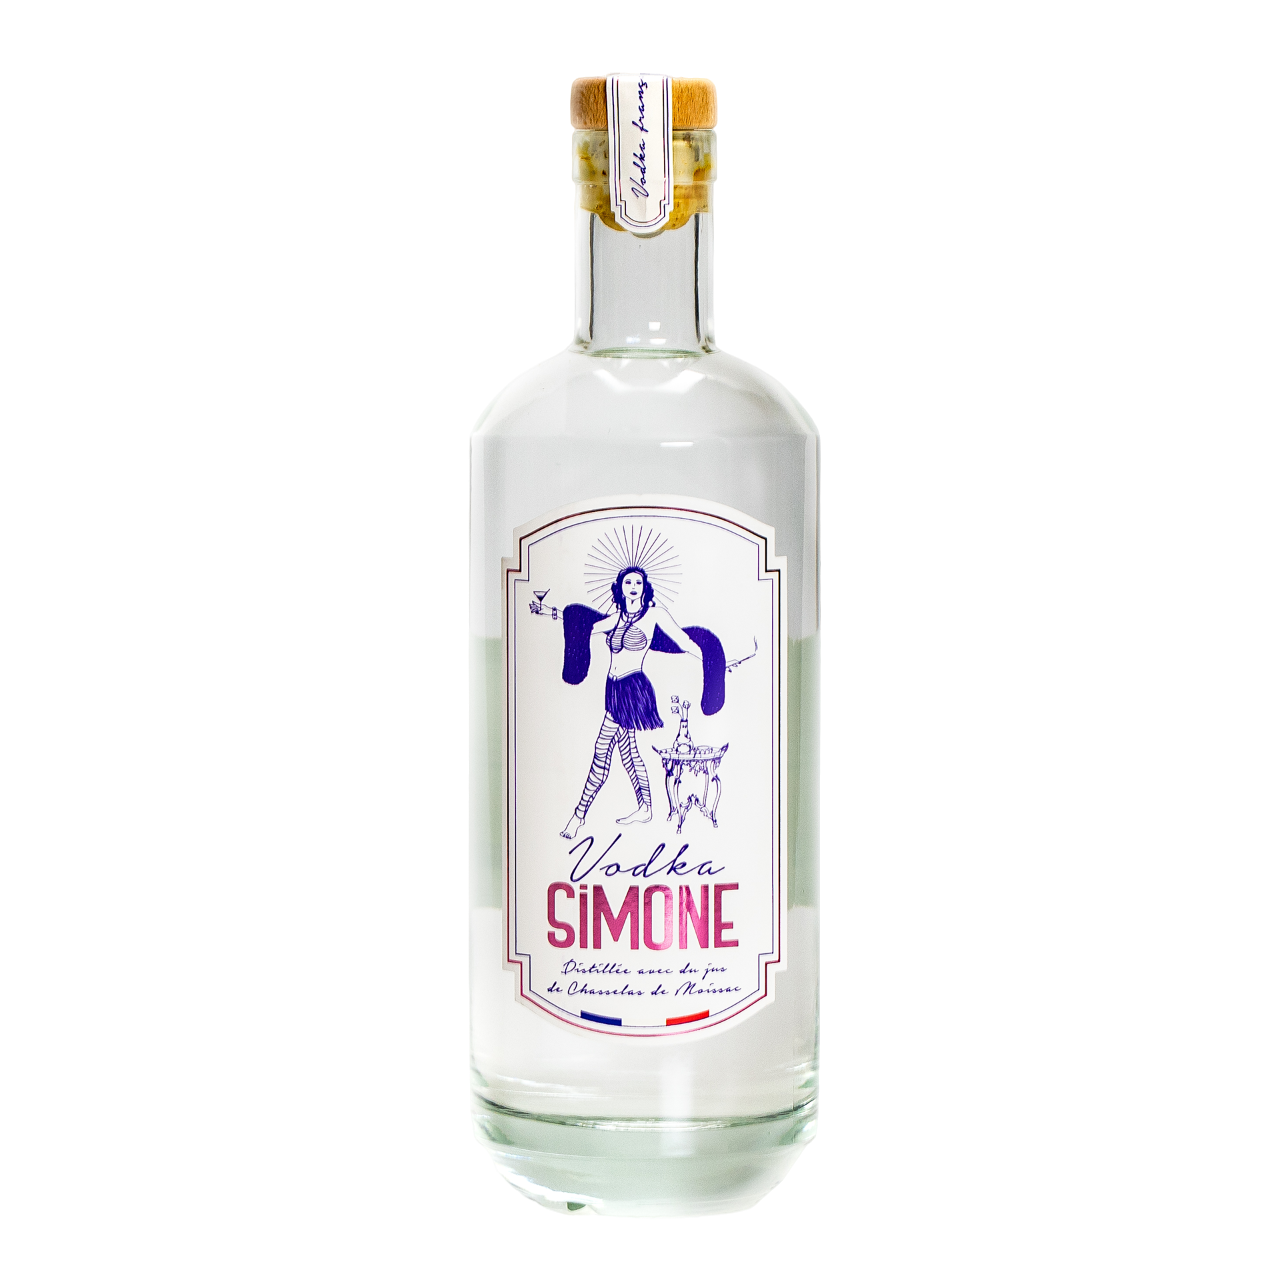 Simone - LA vodka Pépite